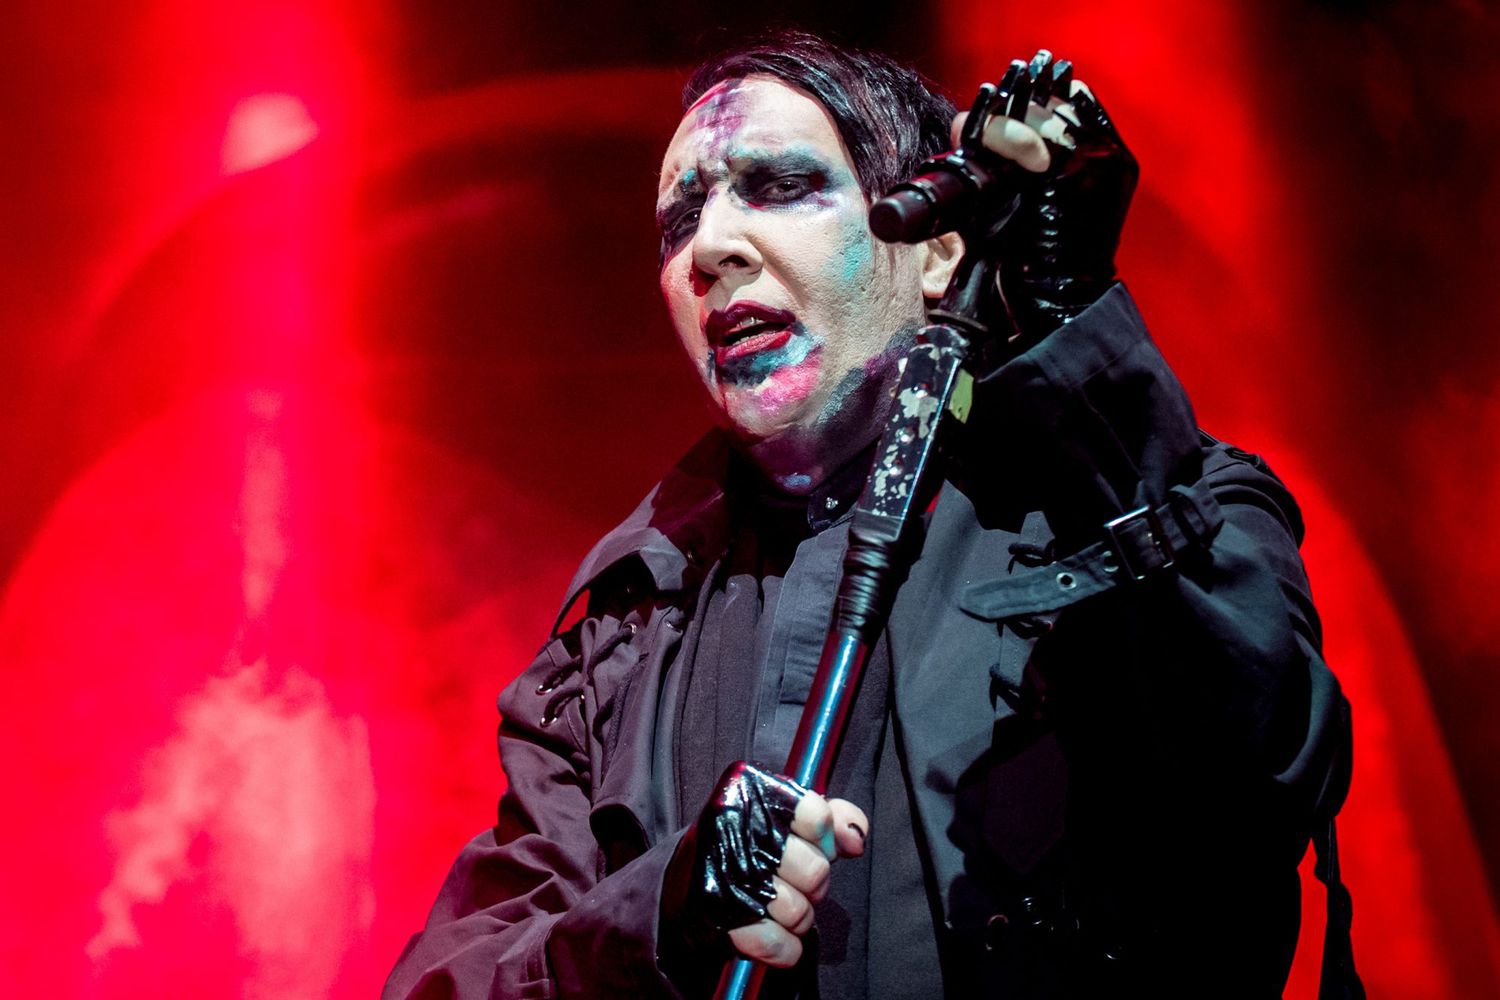 Marilyn Manson Performs In Verona